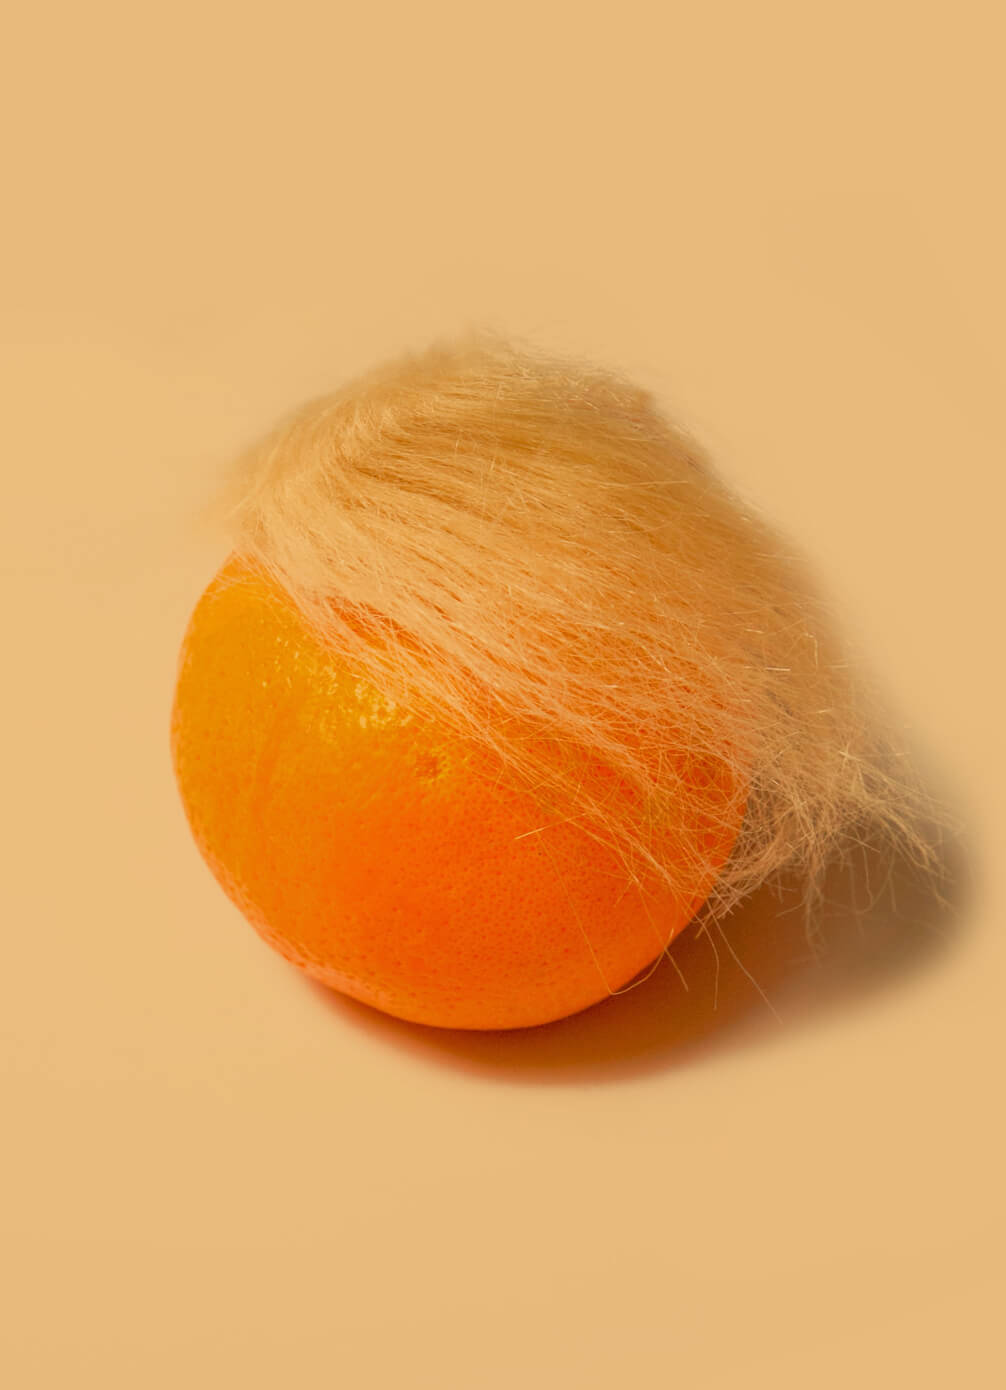 Orange with Toupet Trump photo by Charles Deluvio